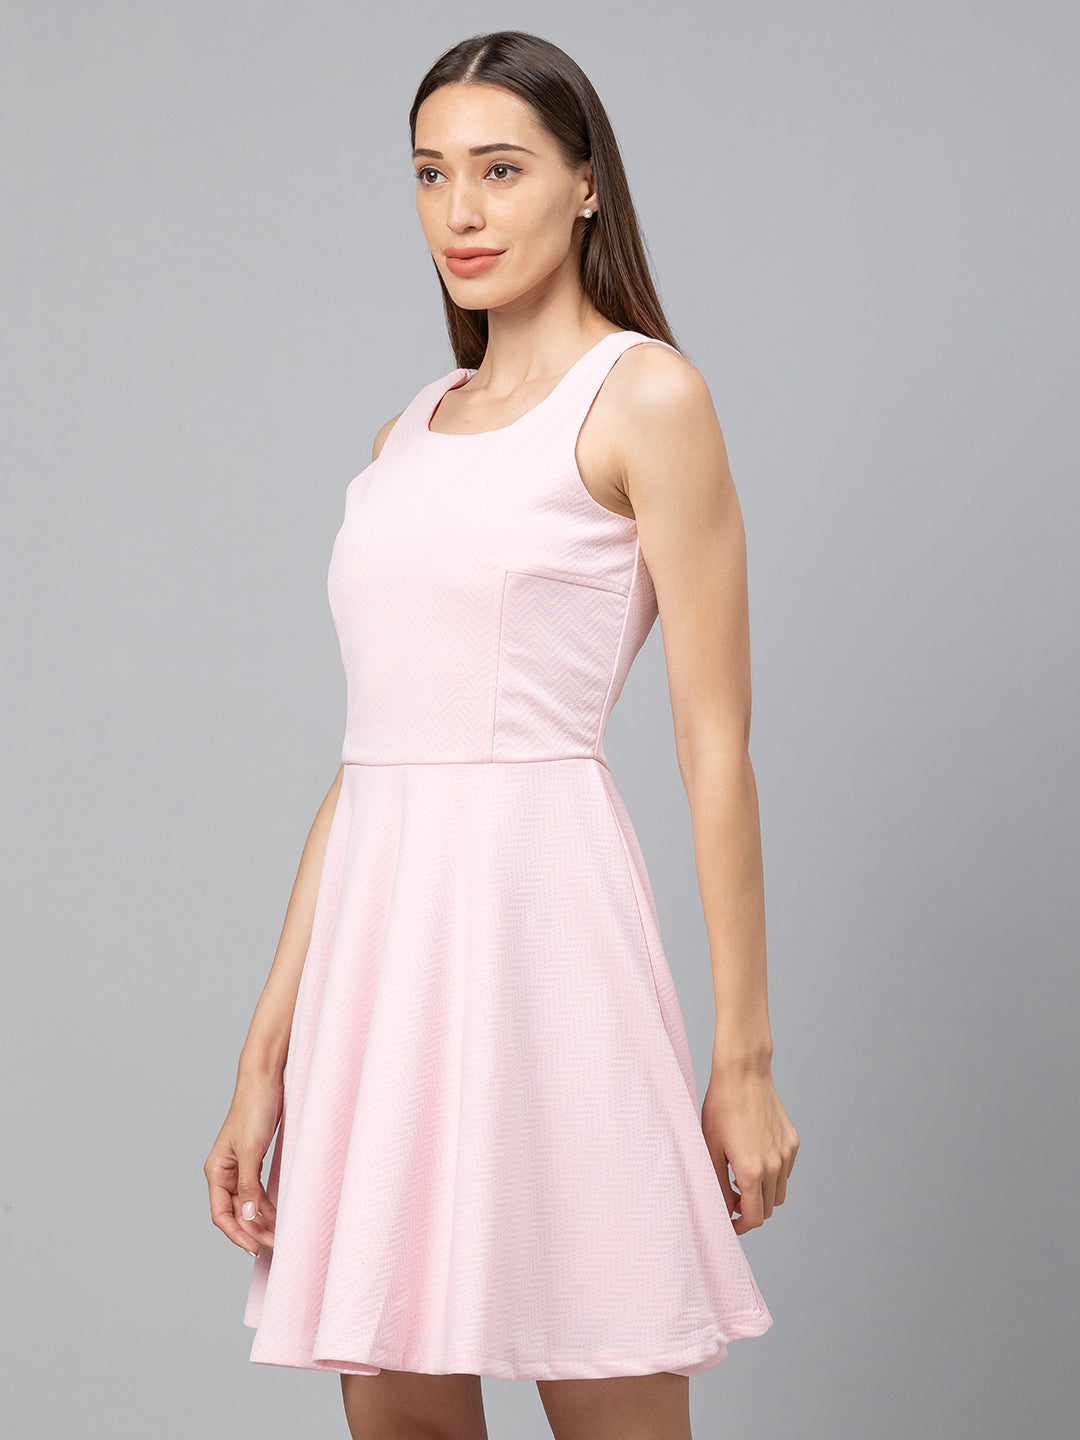 Globus Pink Solid Dress